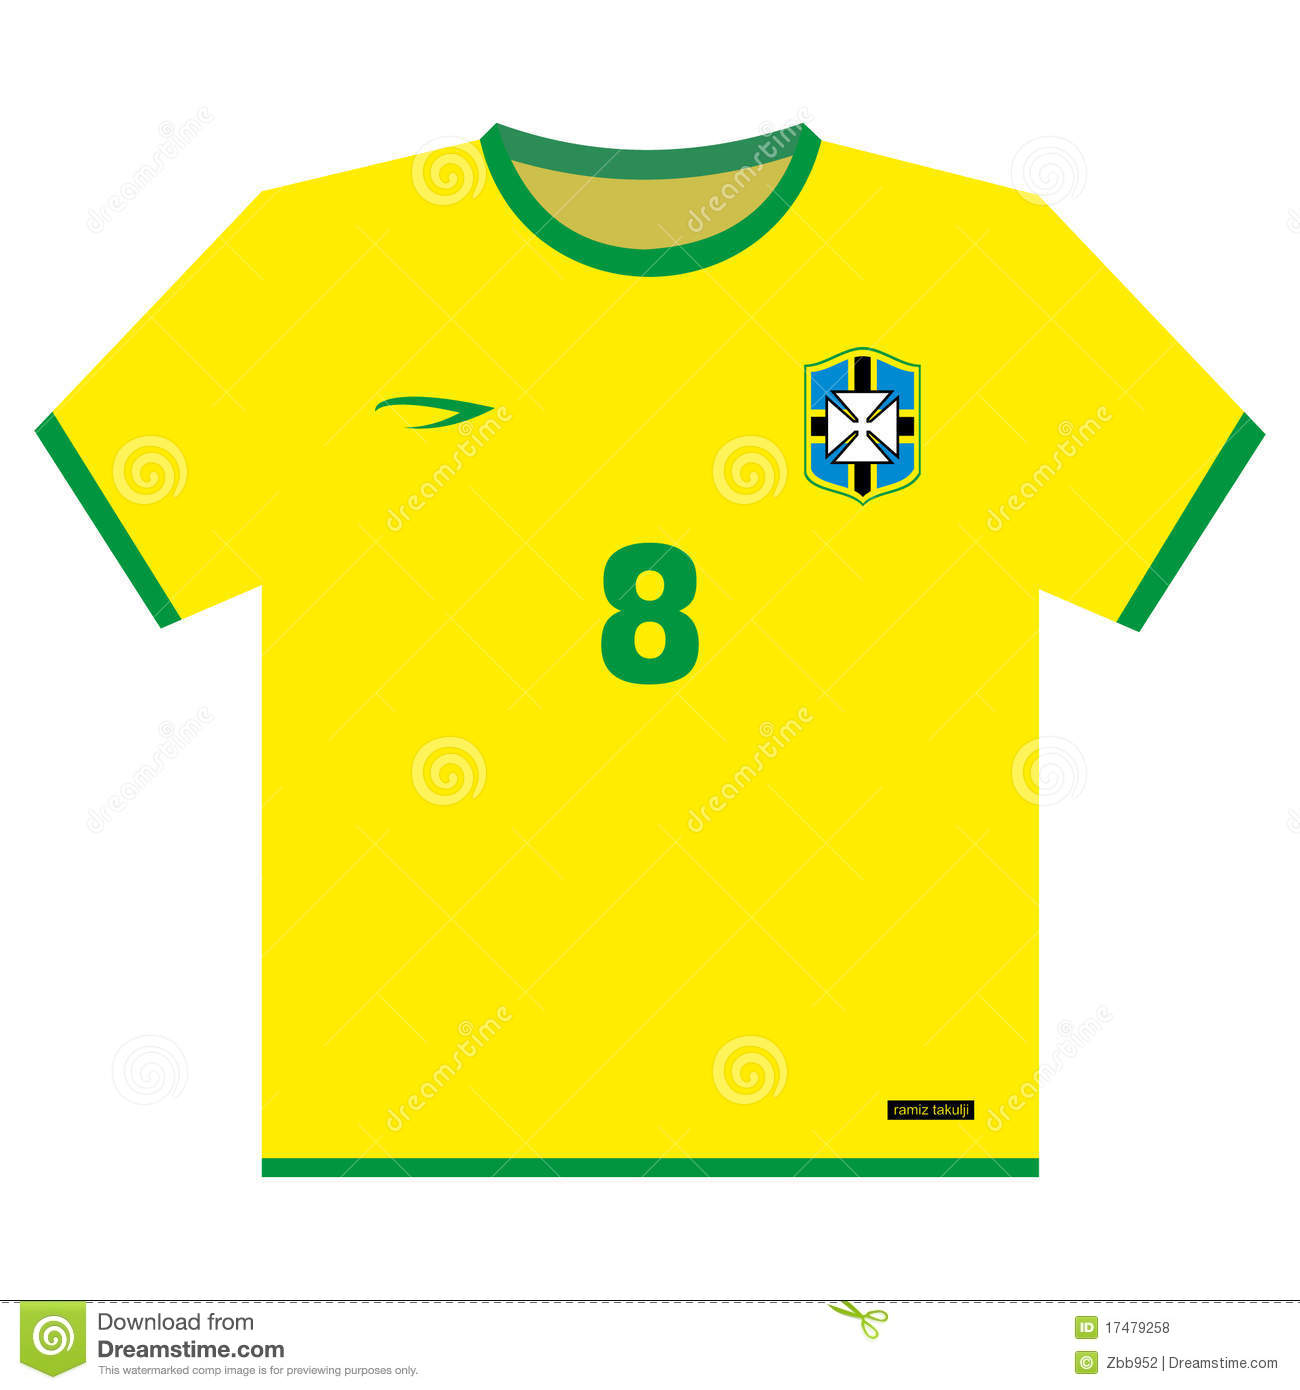 Football  Soccer  Shirt Royalty Free Stock Photos   Image  17479258